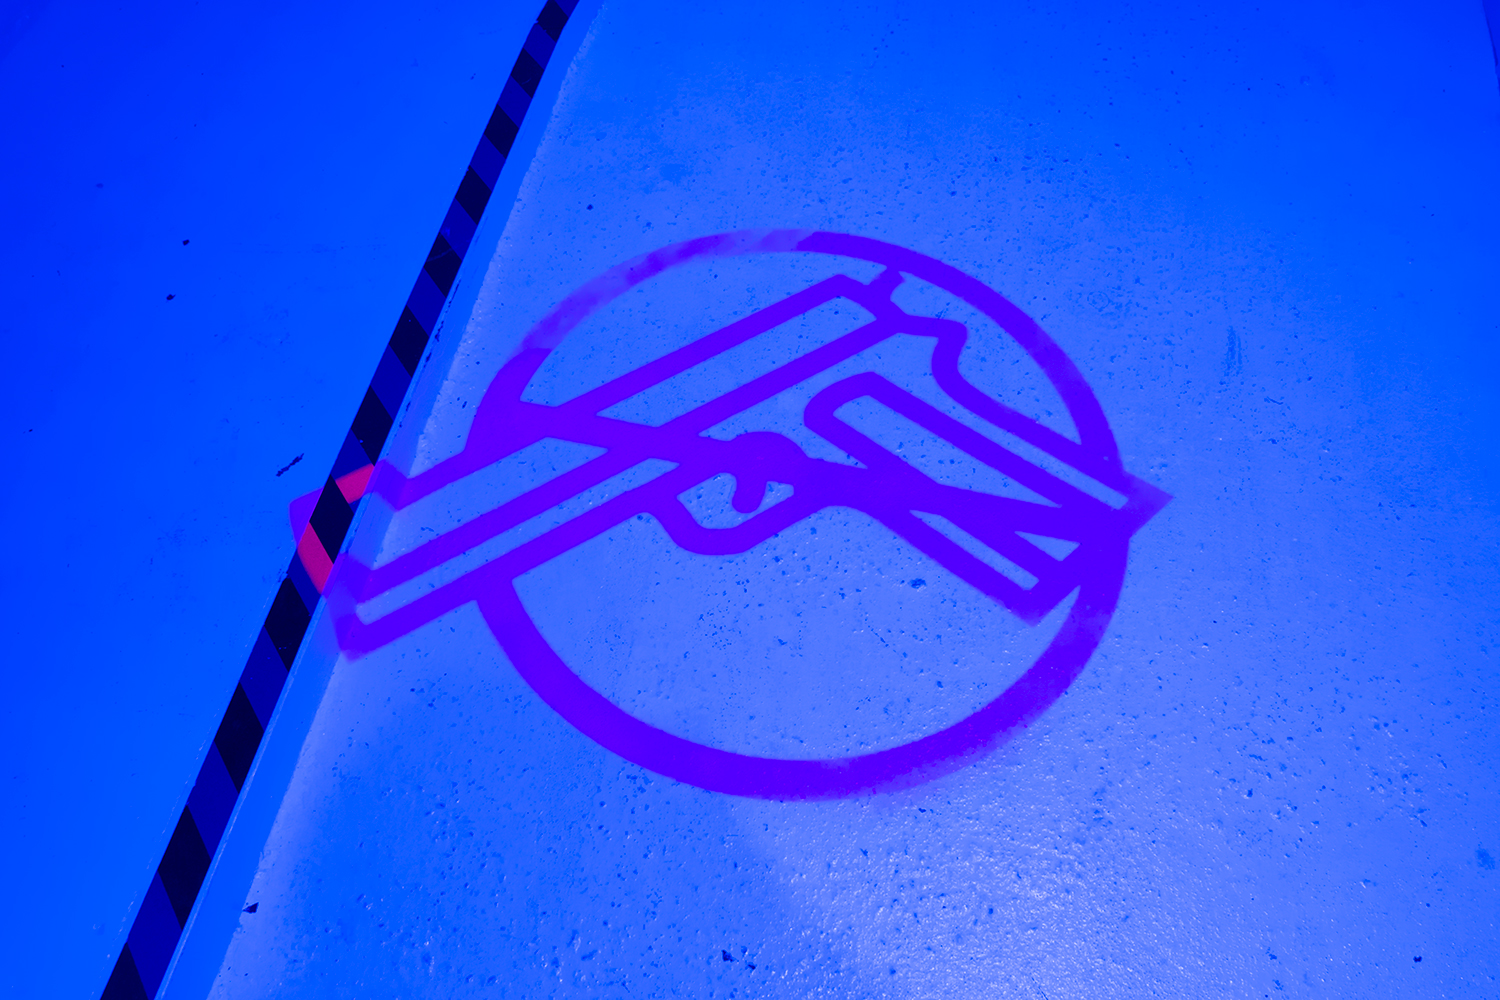 A projected luminous anti-gun symbol on a floor